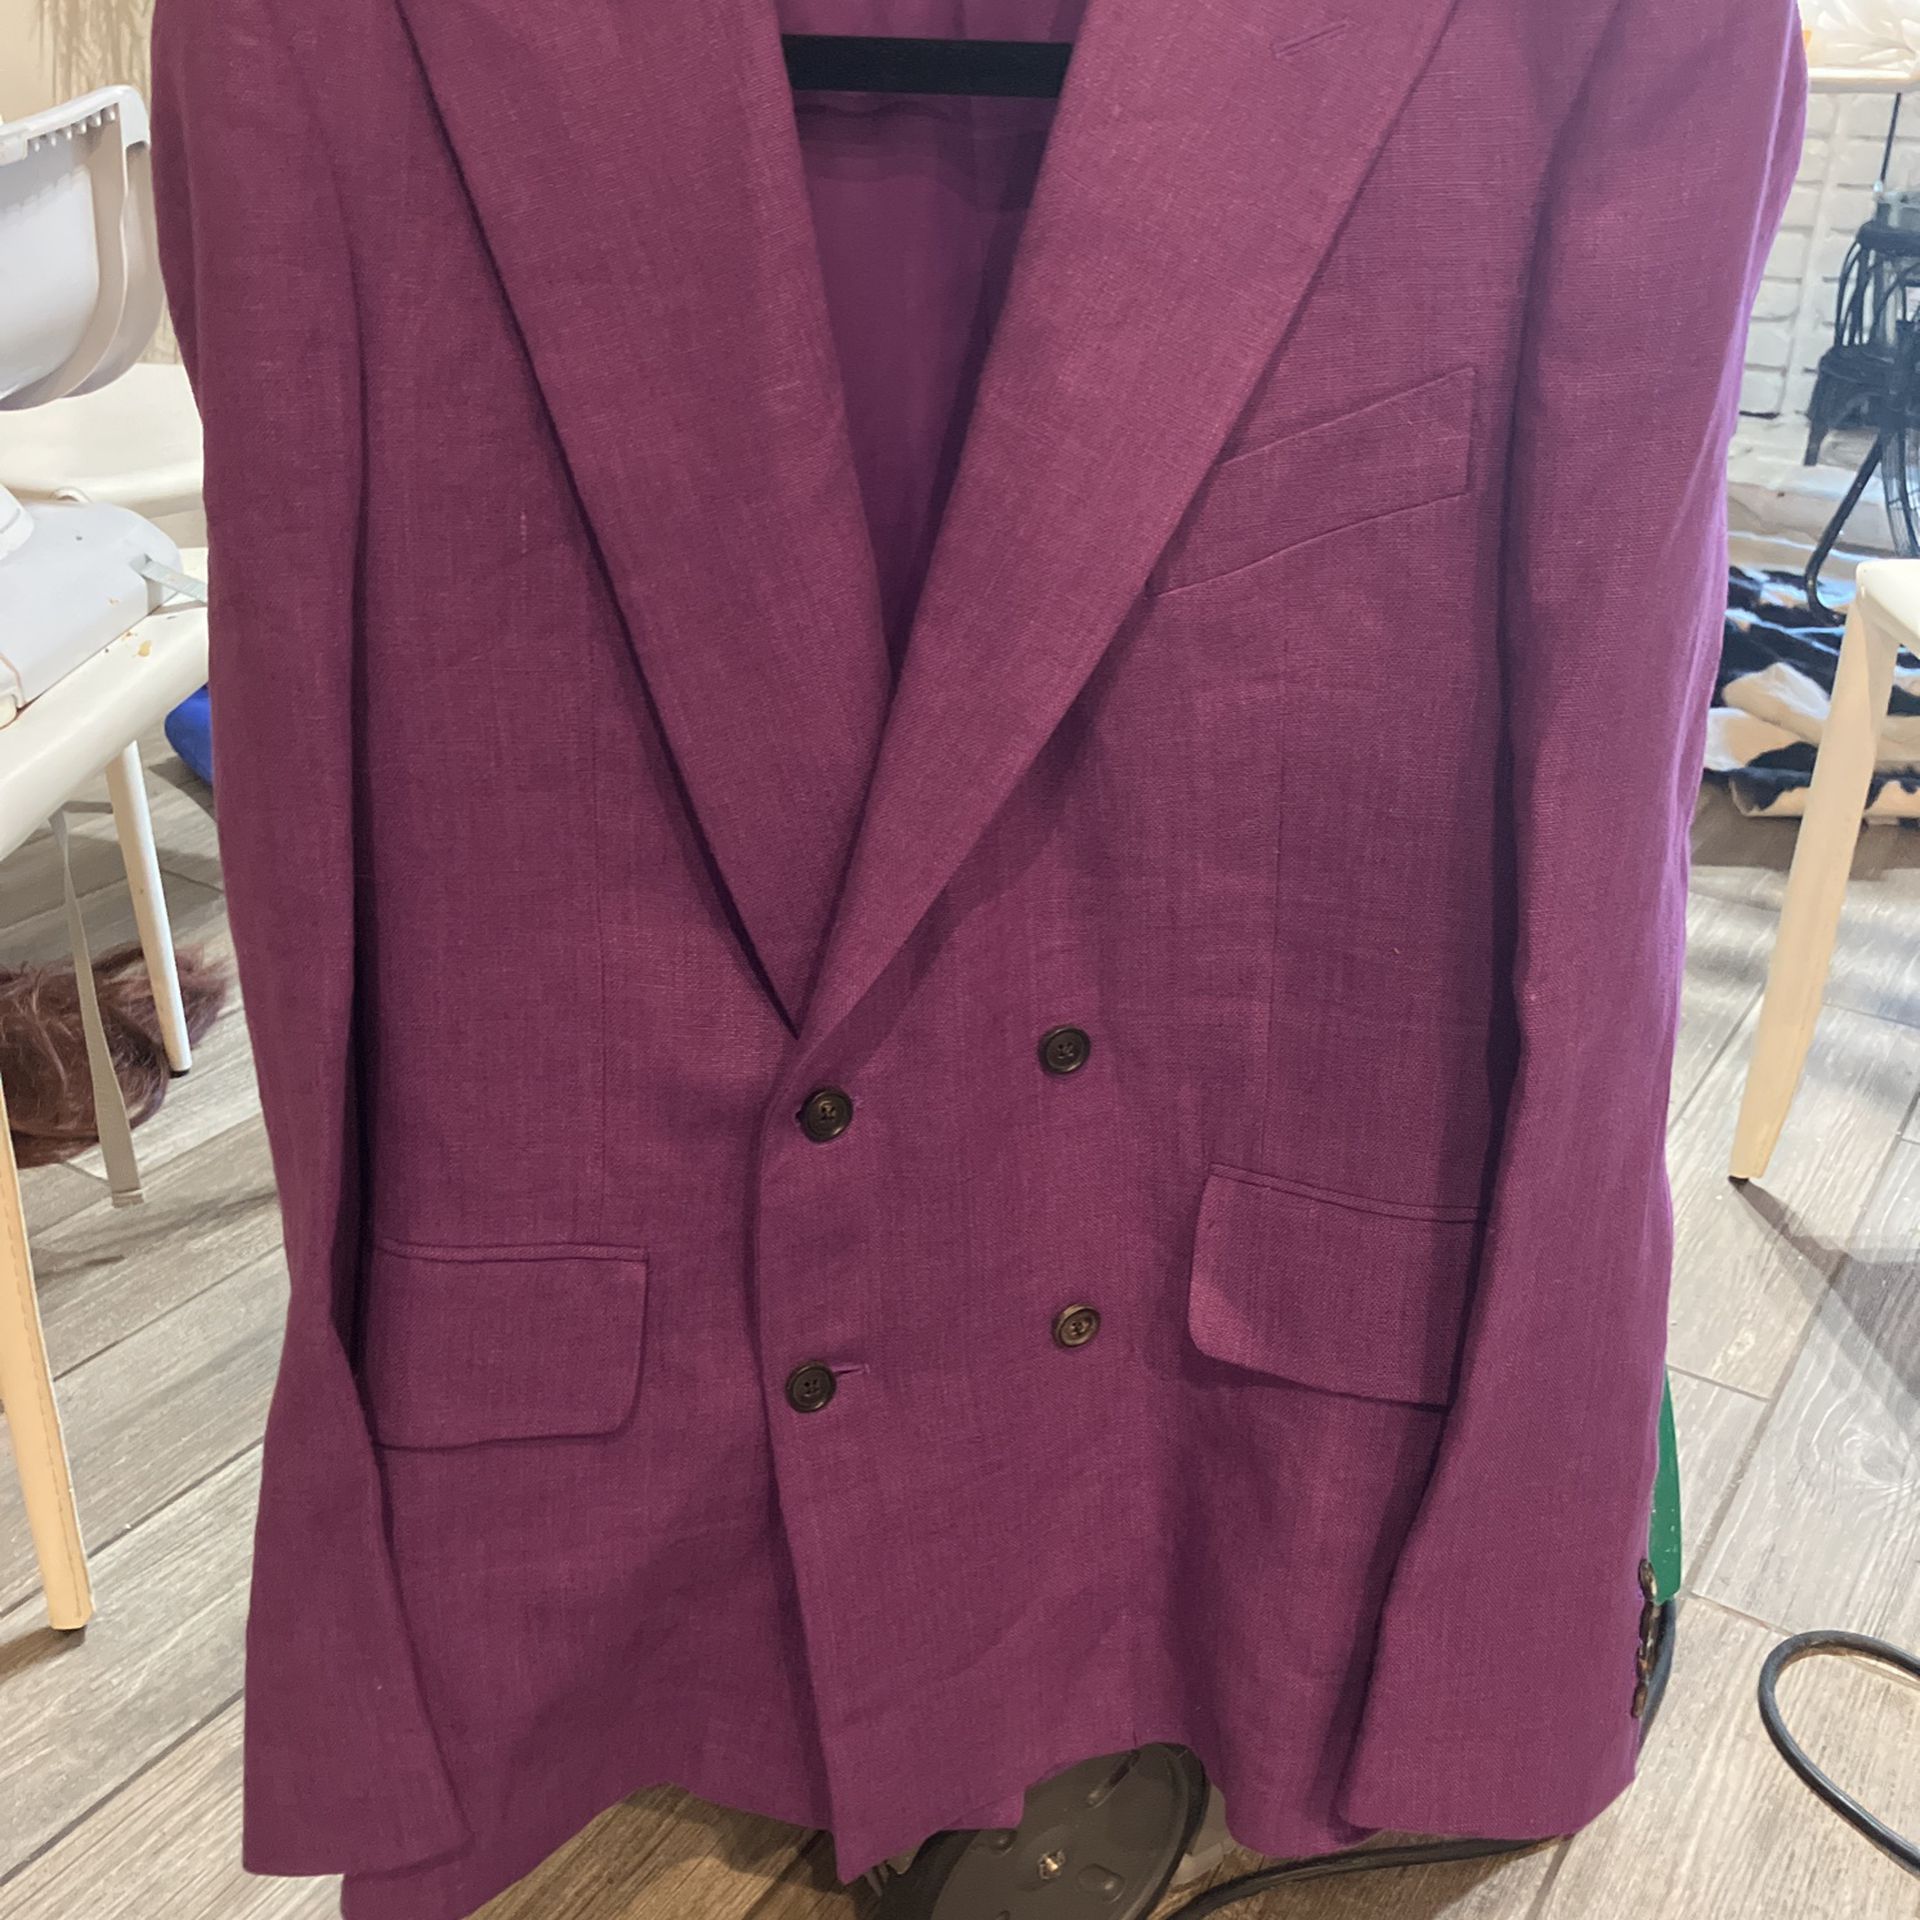 Bode Purple Linen Suit And Dress Shirt